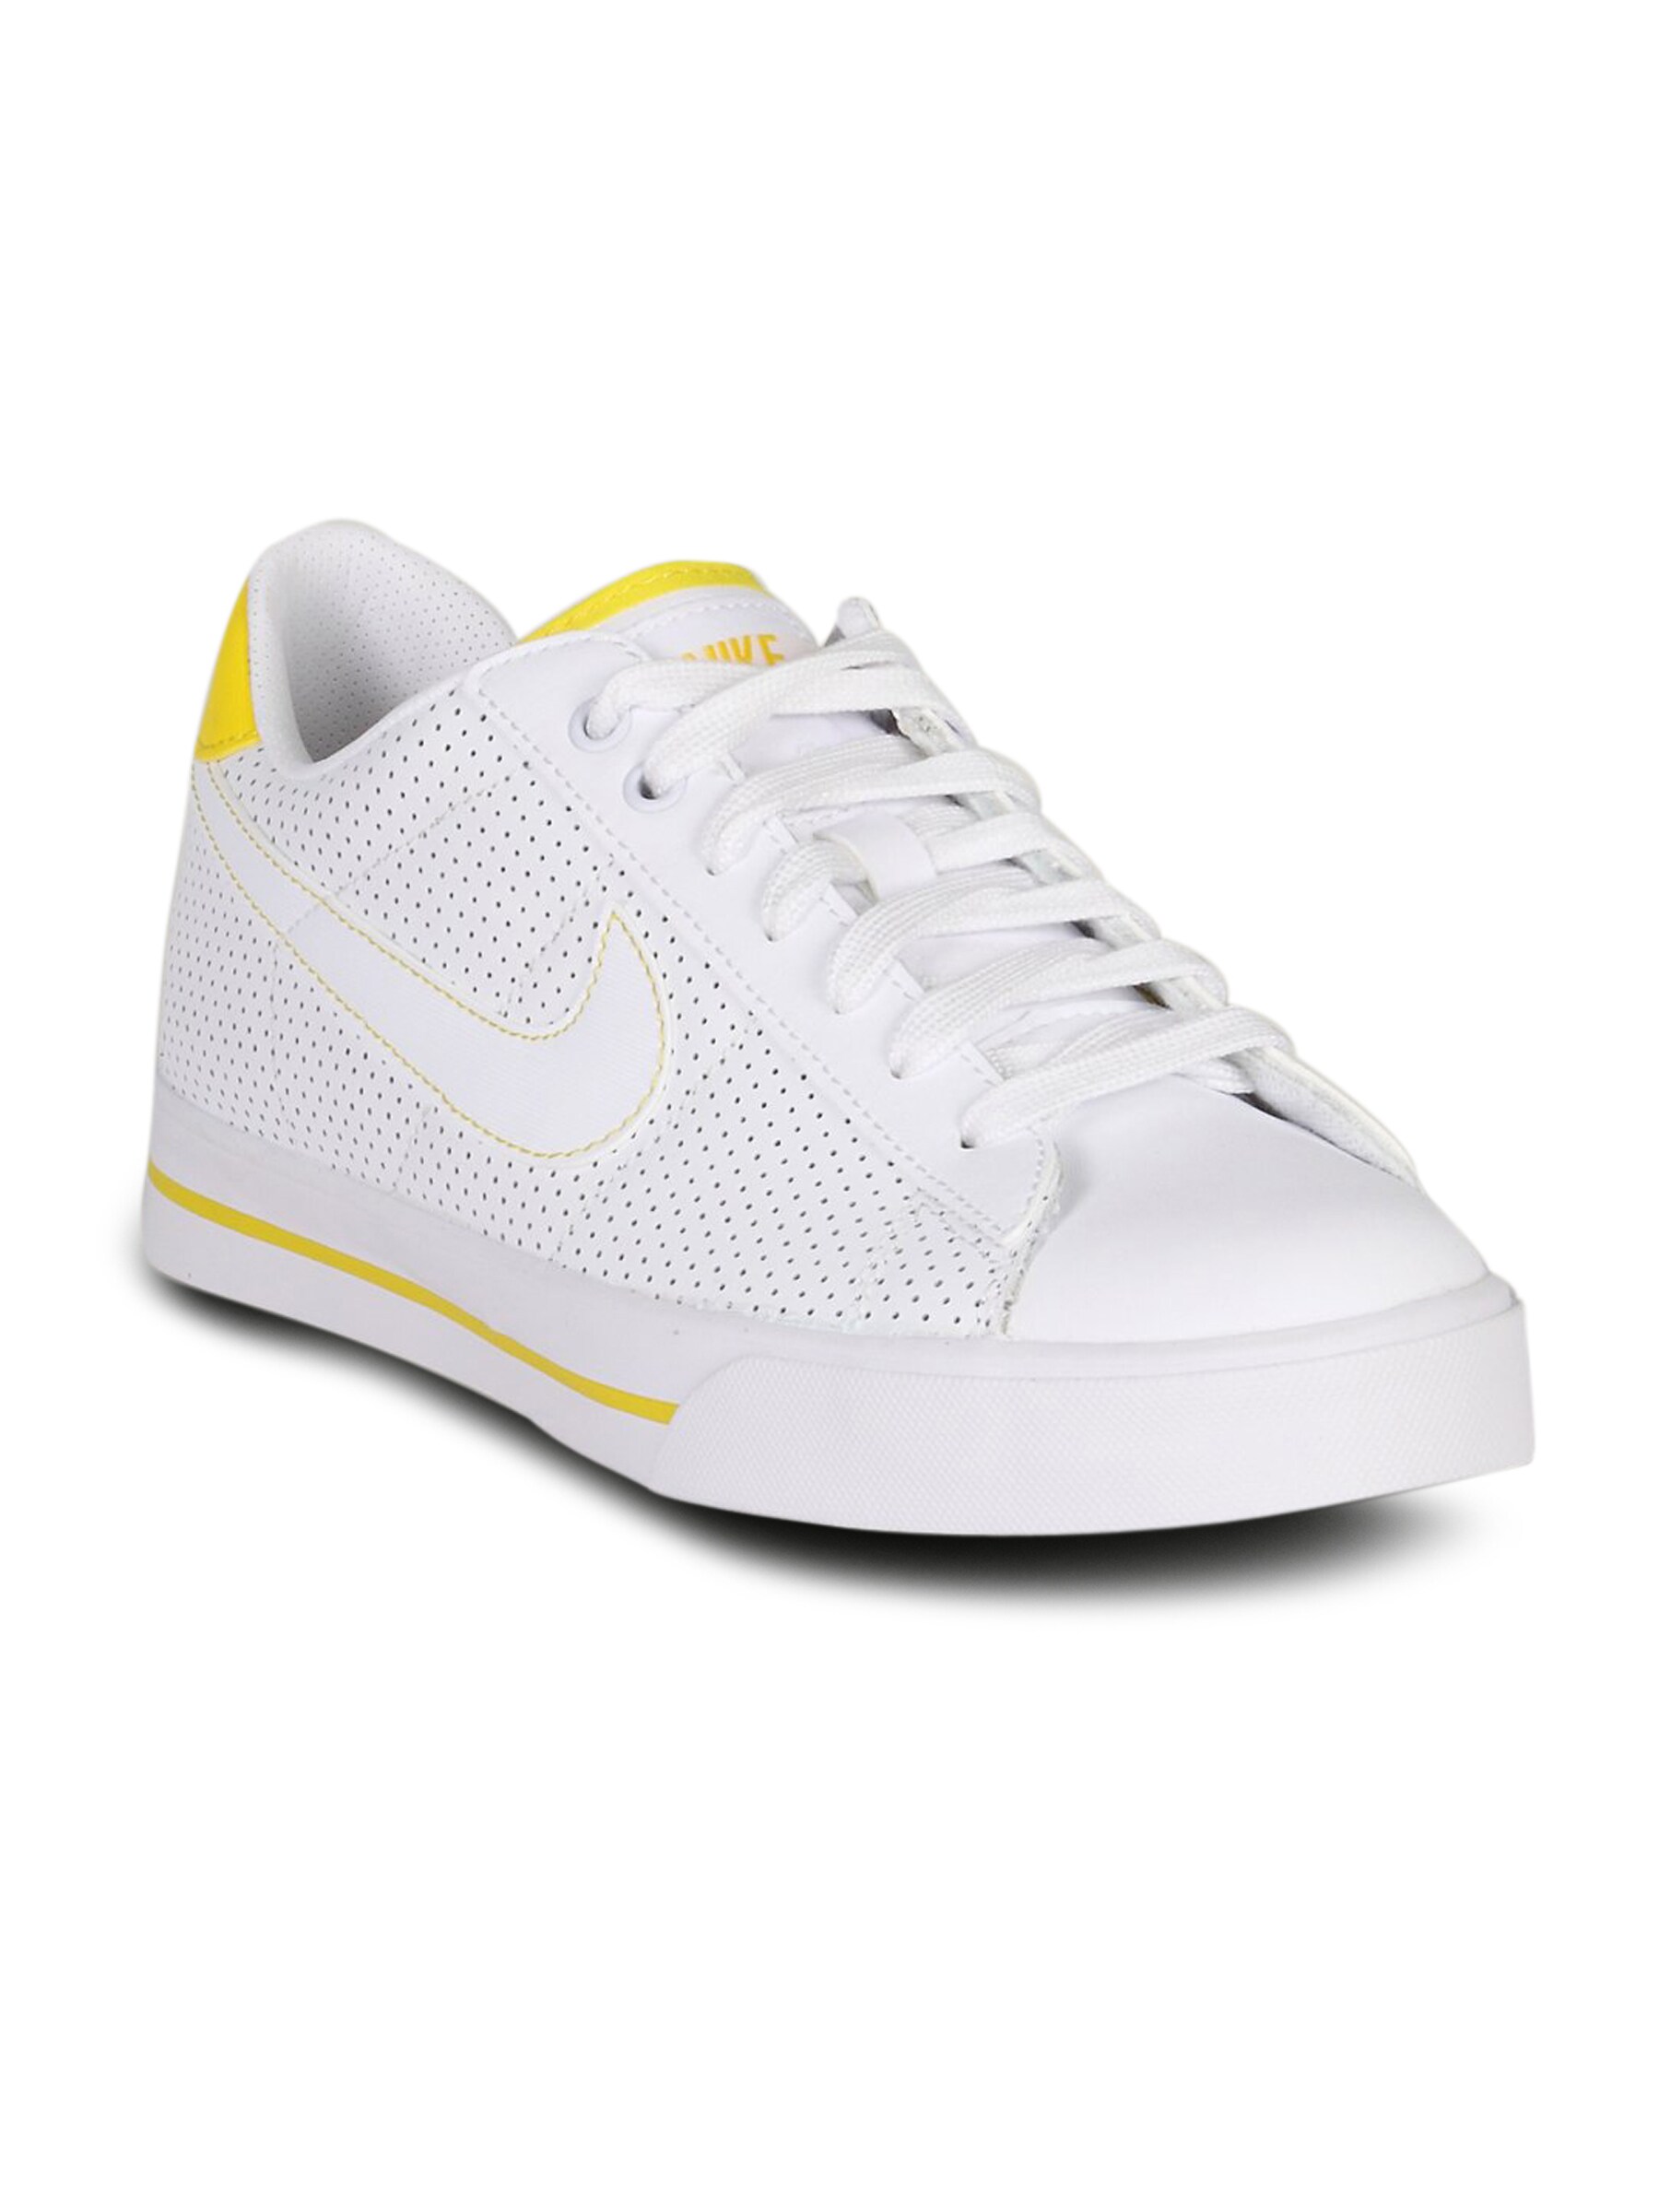 Nike Men's Sweet Classic White Shoe